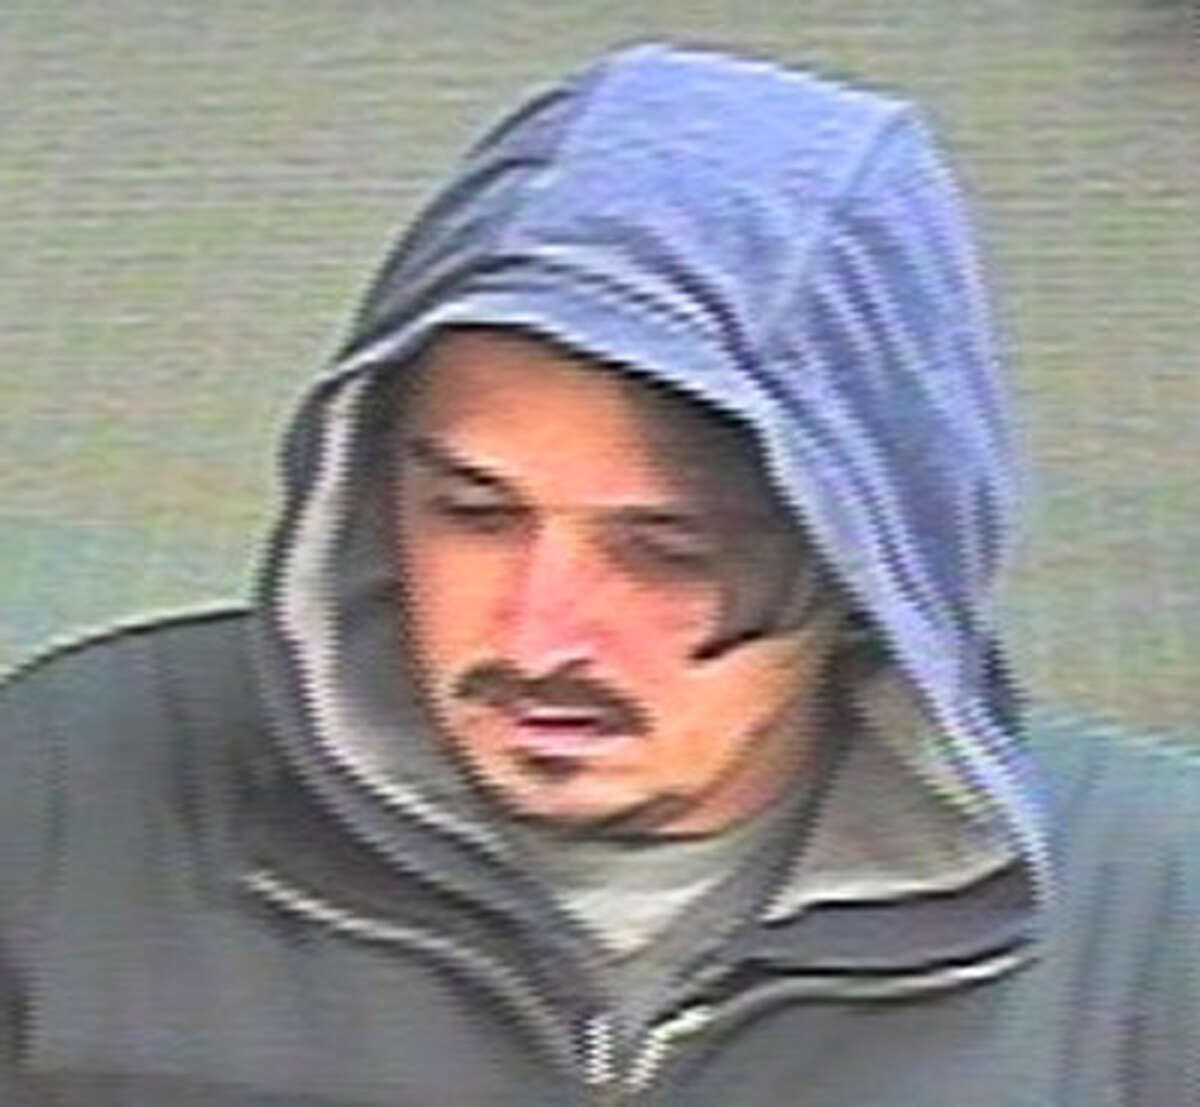 Bank surveillance video photo of suspect.